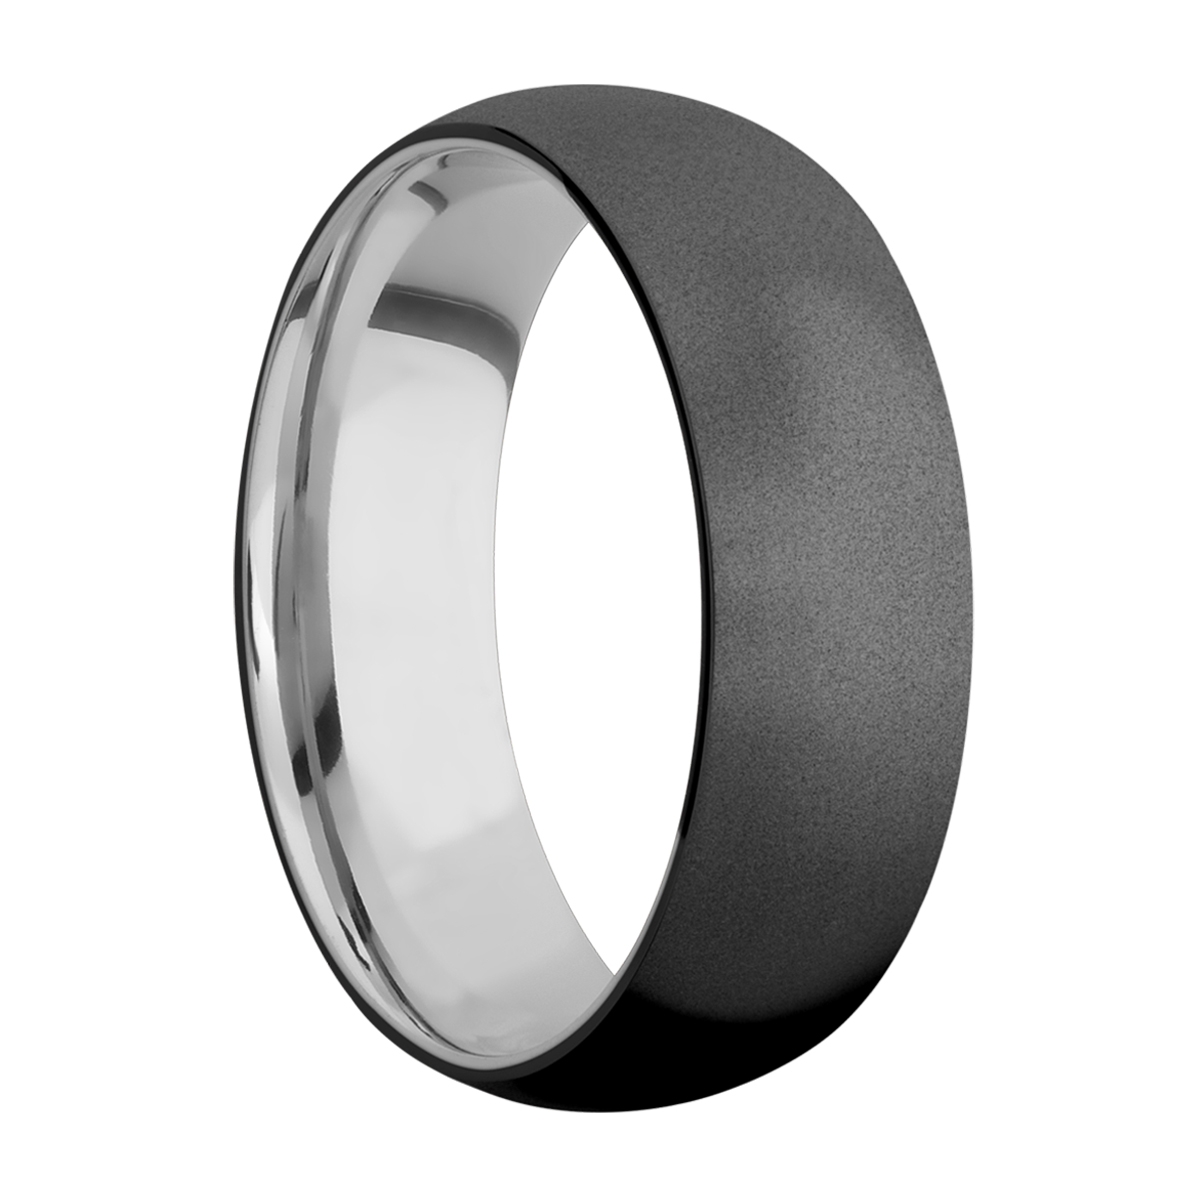 Lashbrook CCSLEEVEZ7D Zirconium and Cobalt Chrome Wedding Ring or Band Alternative View 1